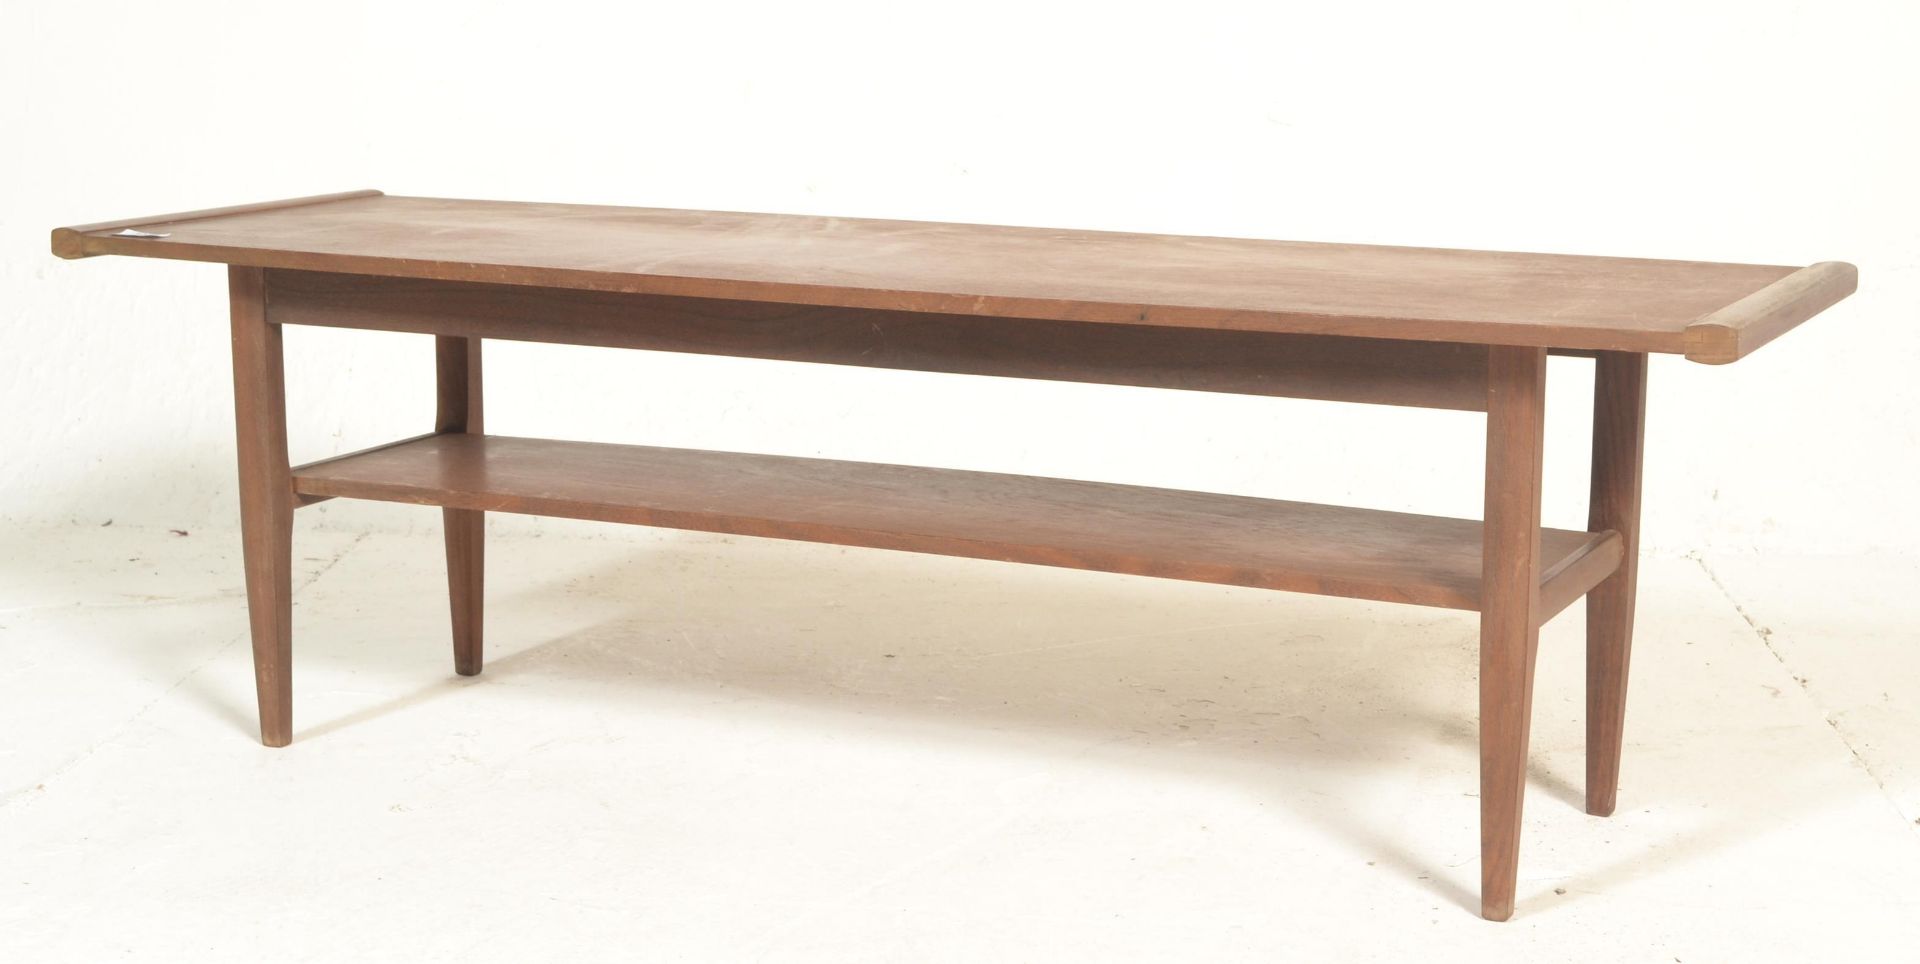 A 1960's retro vintage teak wood long john two tier coffee table having a long rectangular top